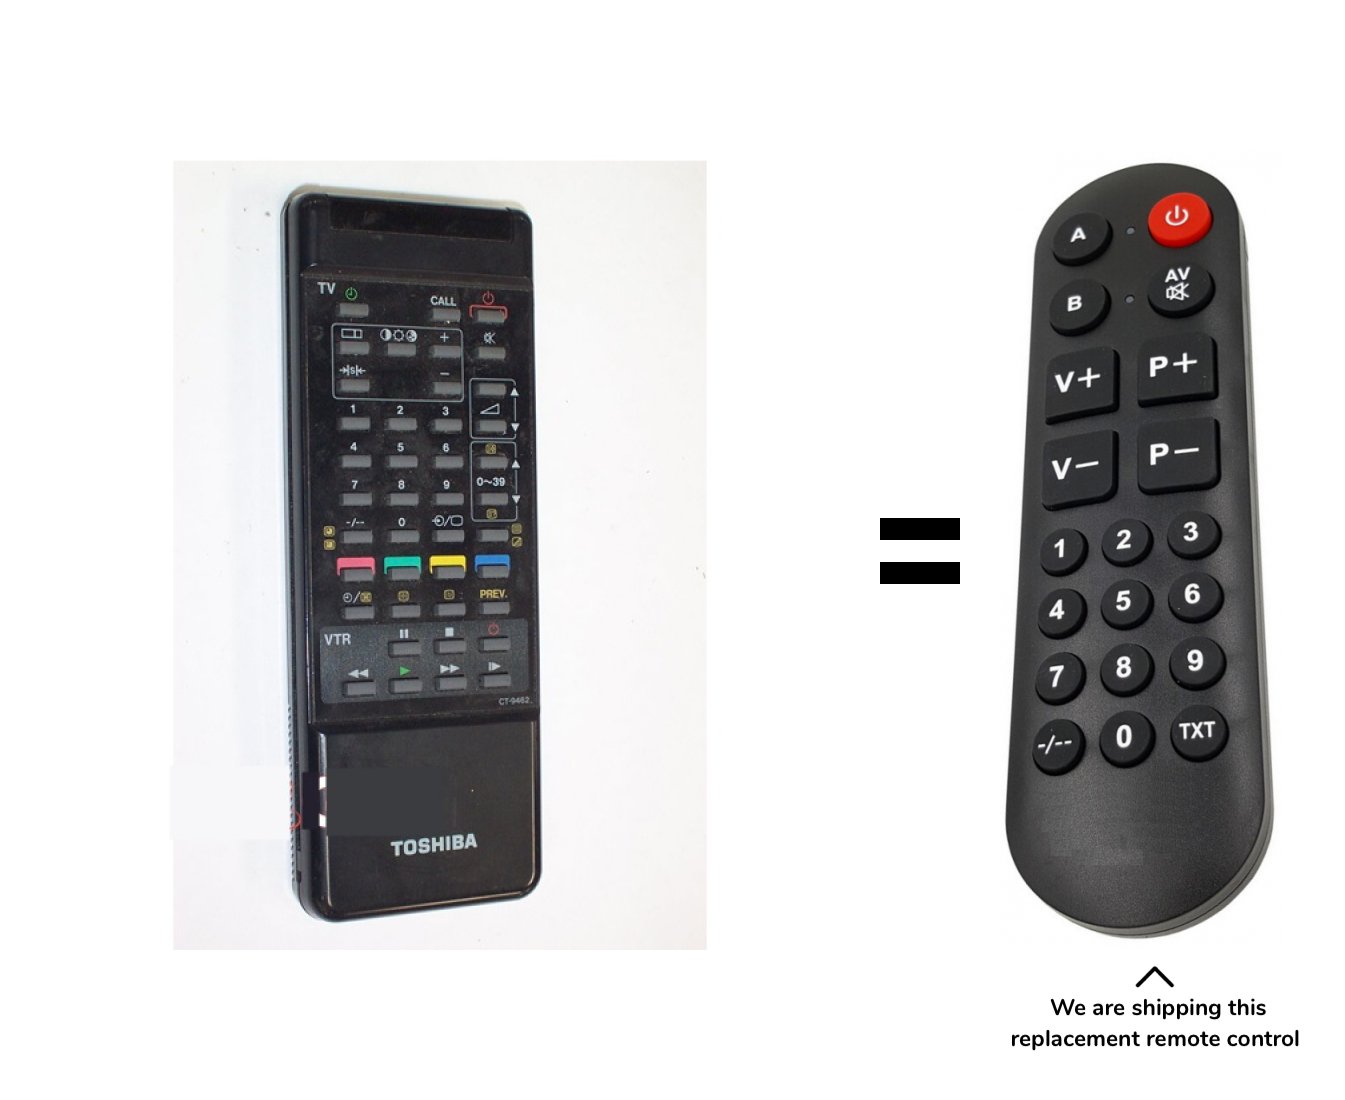 Toshiba CT-9462 remote control for seniors